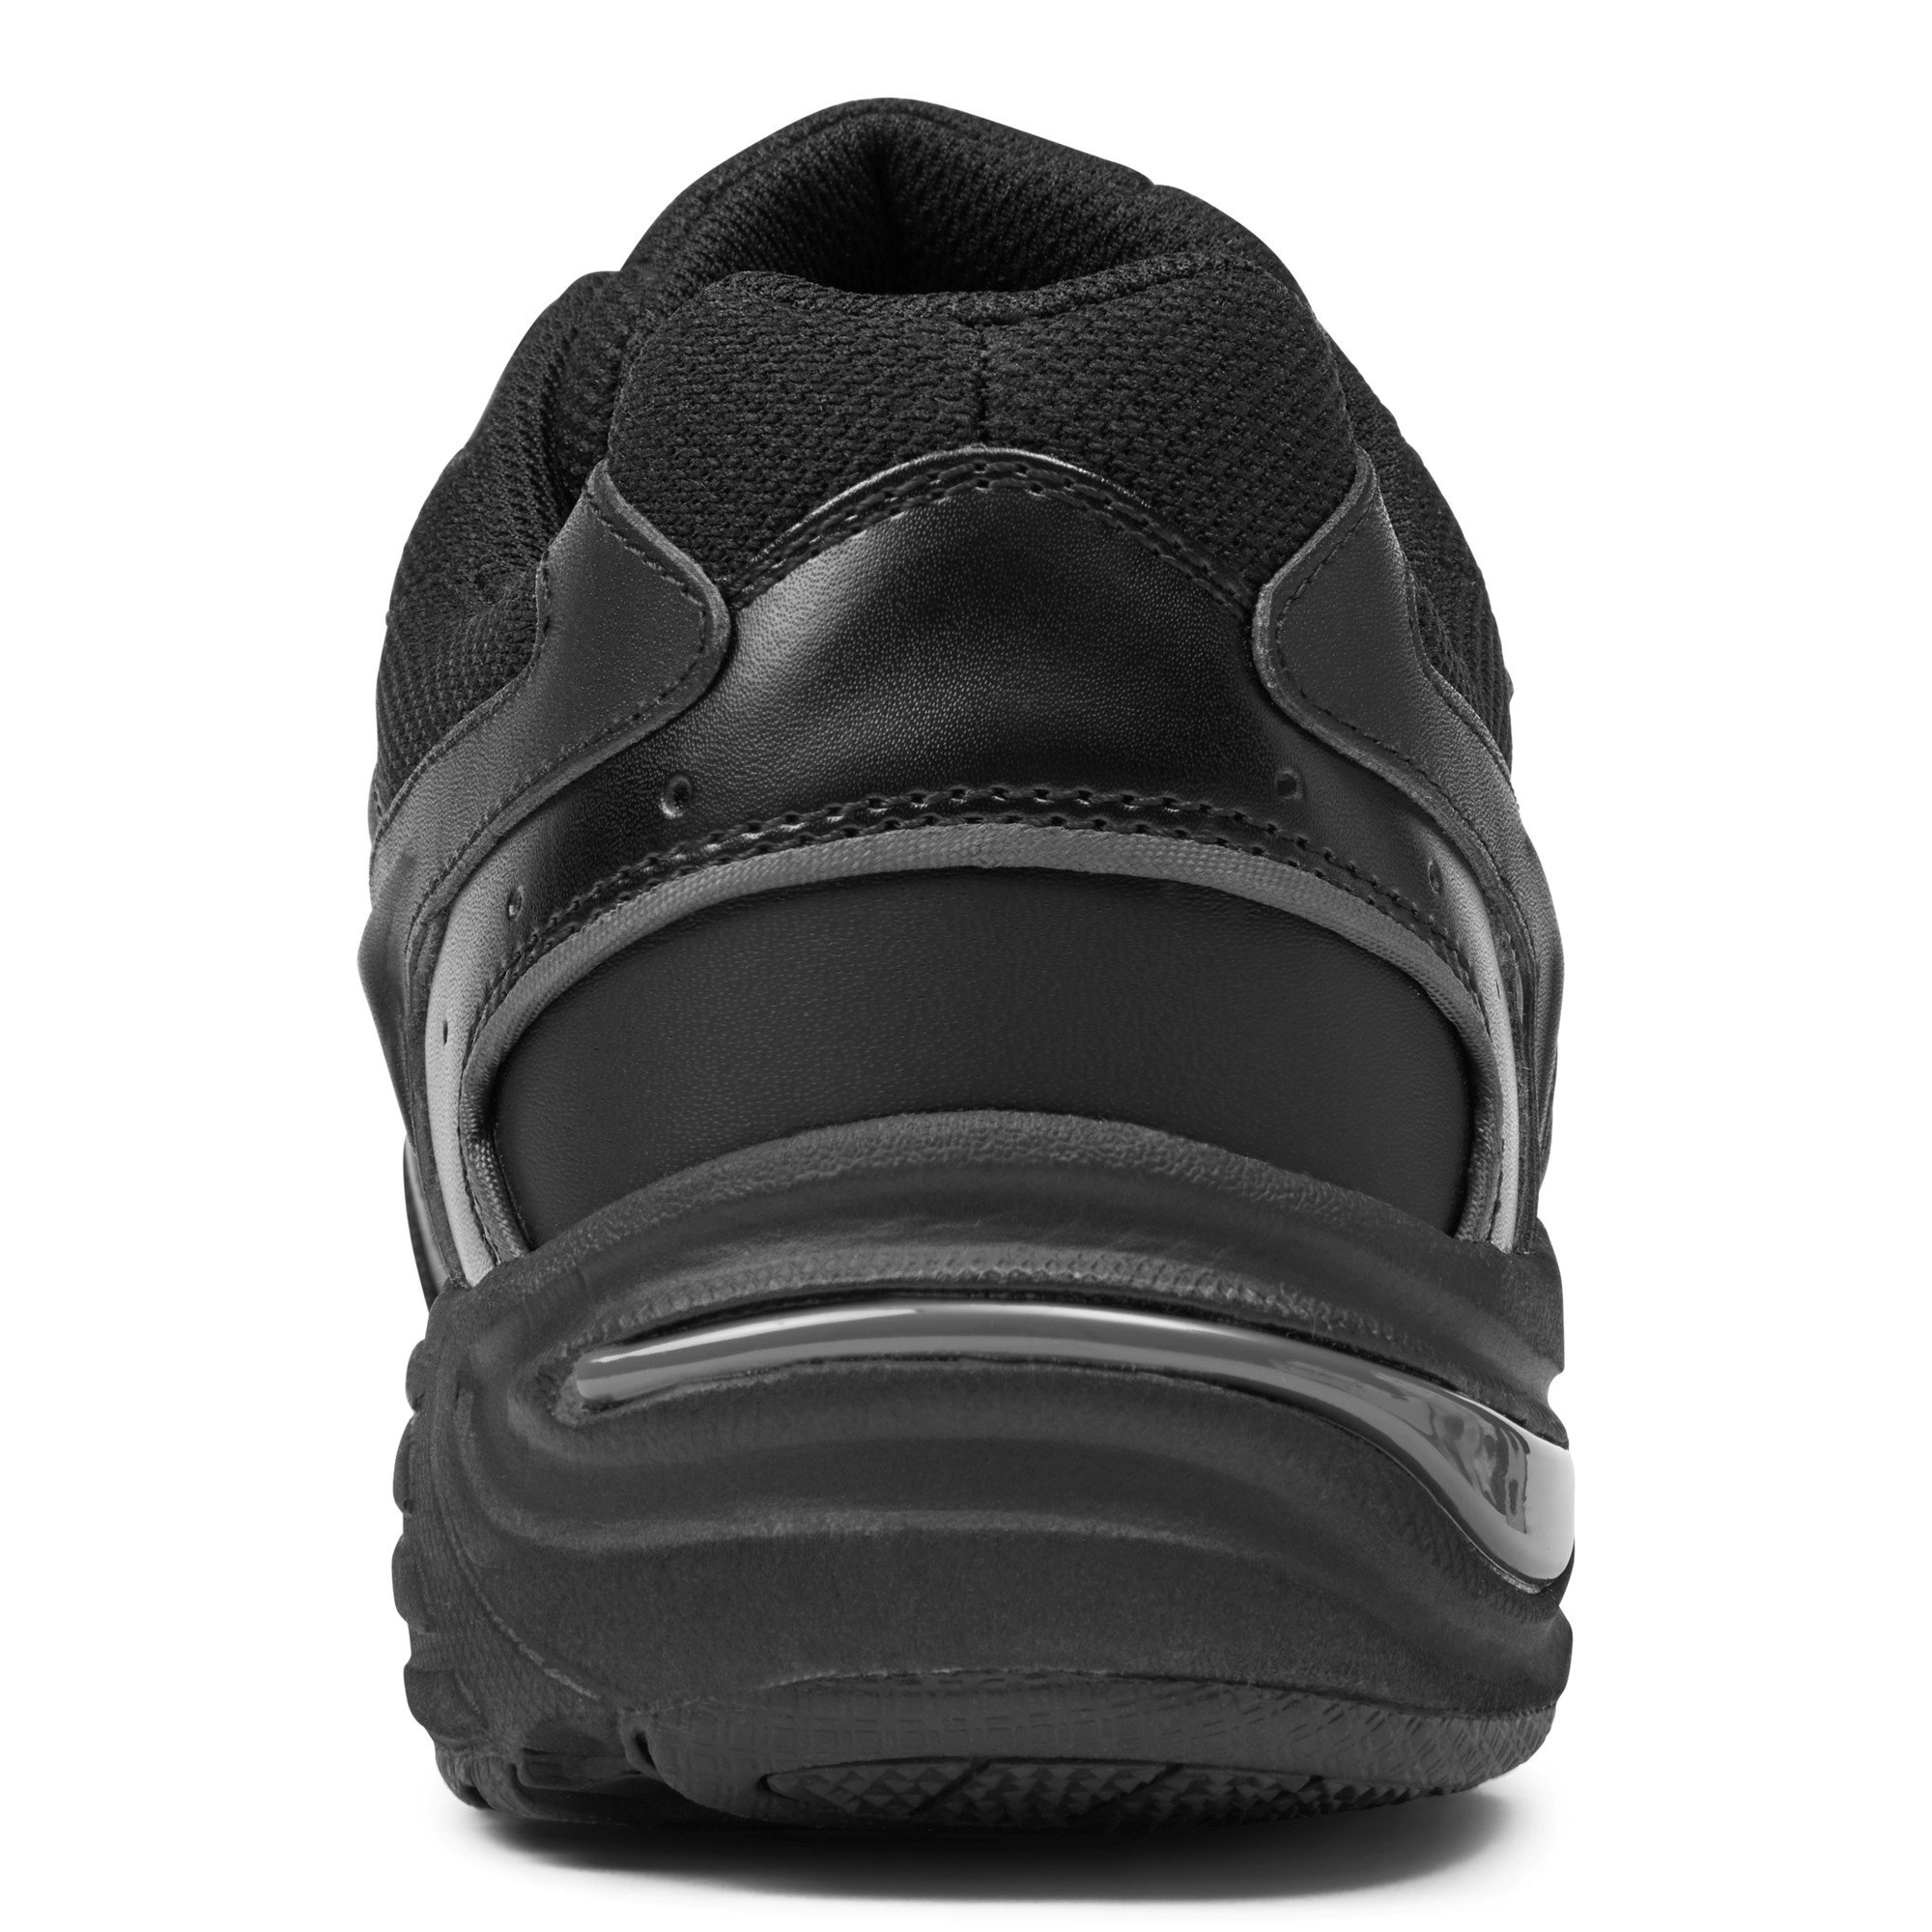 Vionic Albert Men's Orthotic Walking Shoe - Strap Closure - image 5 of 7